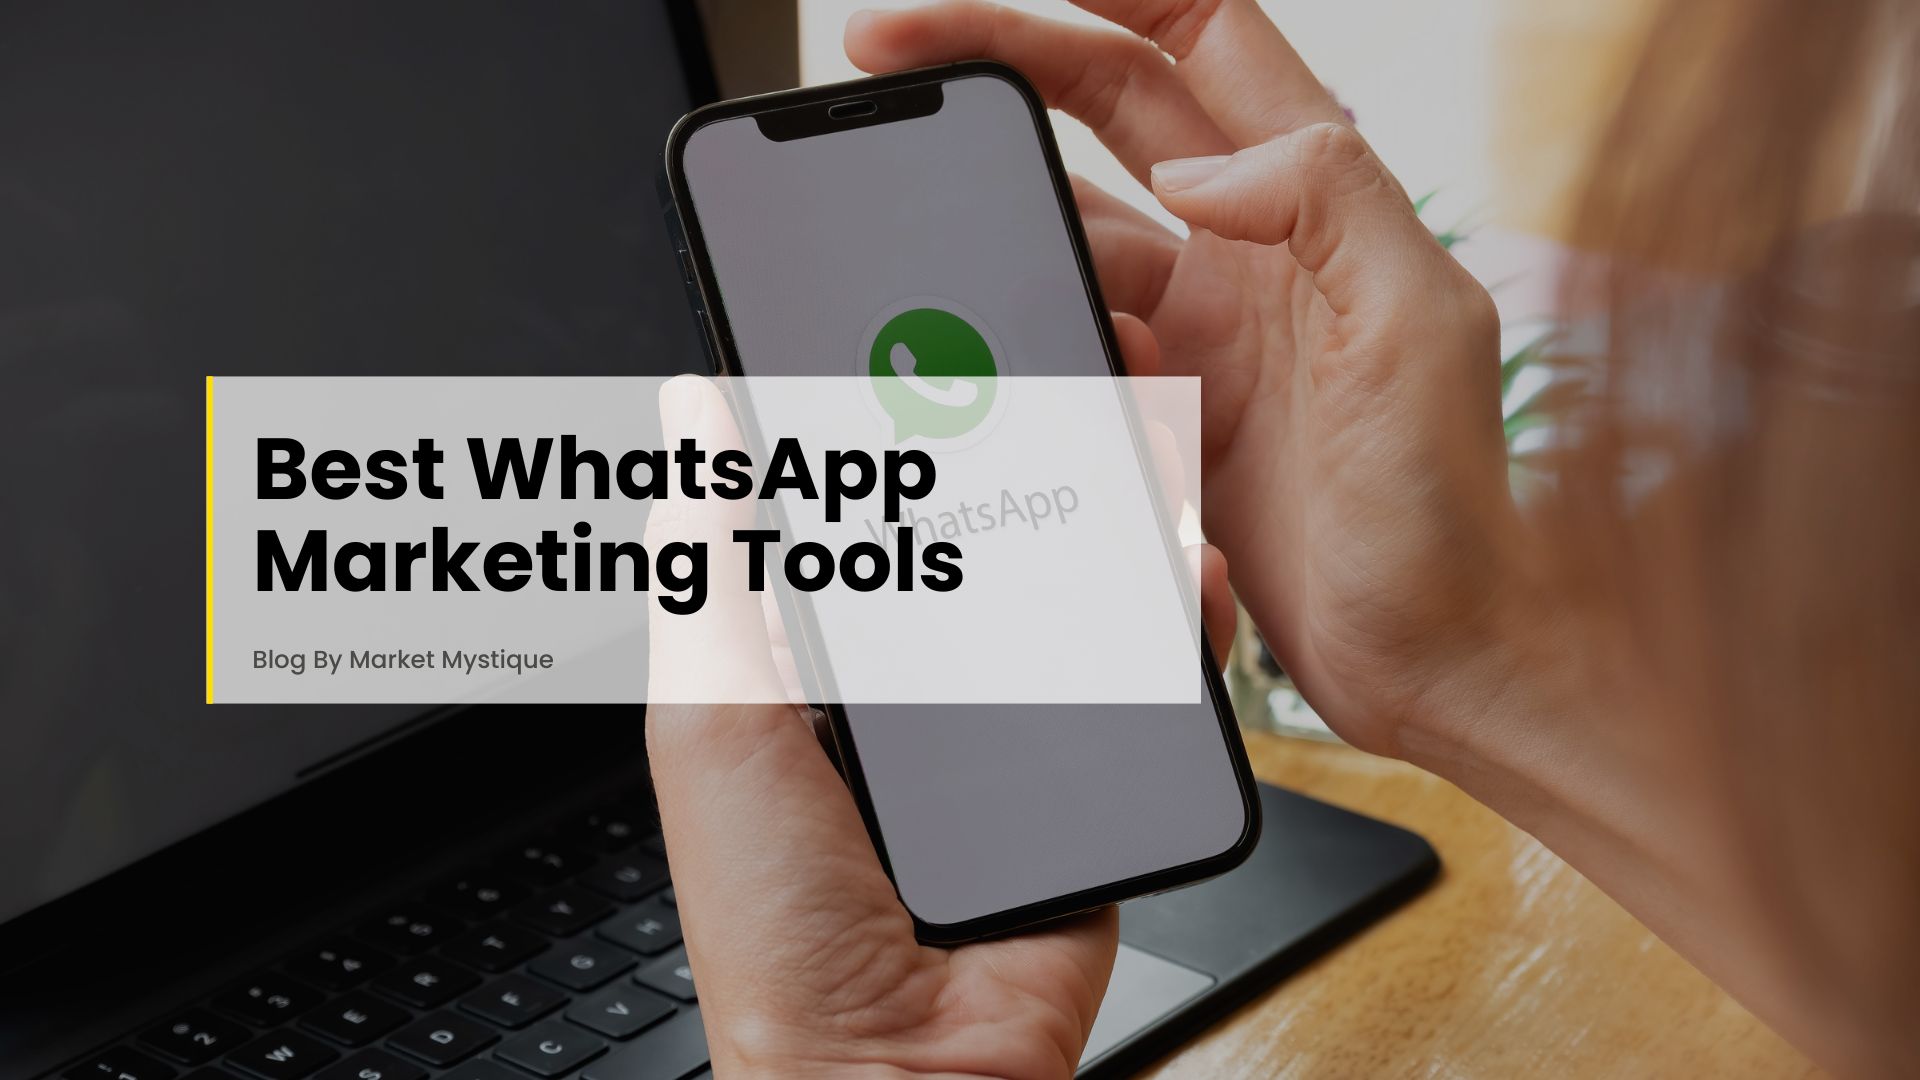 Whatsapp marketing tools